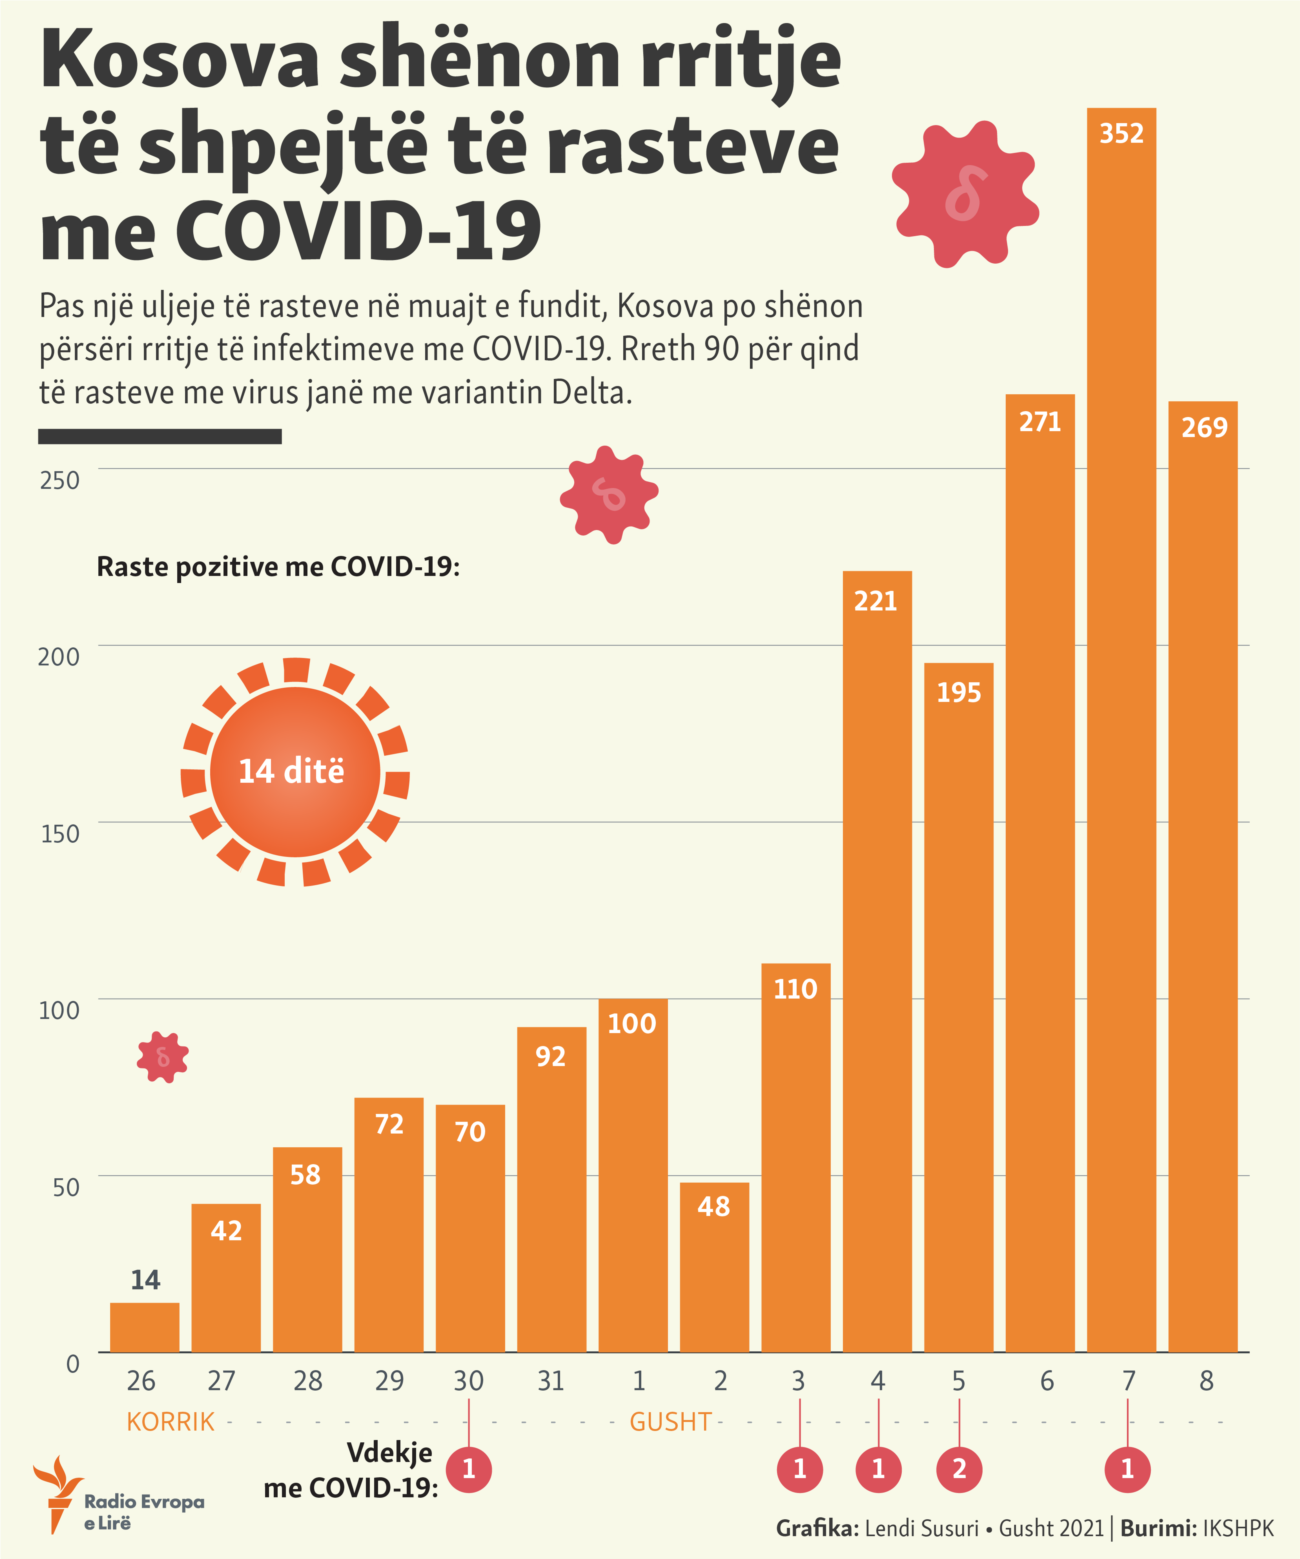 Kosovo: Infographics about COVID-19 cases in Kosovo